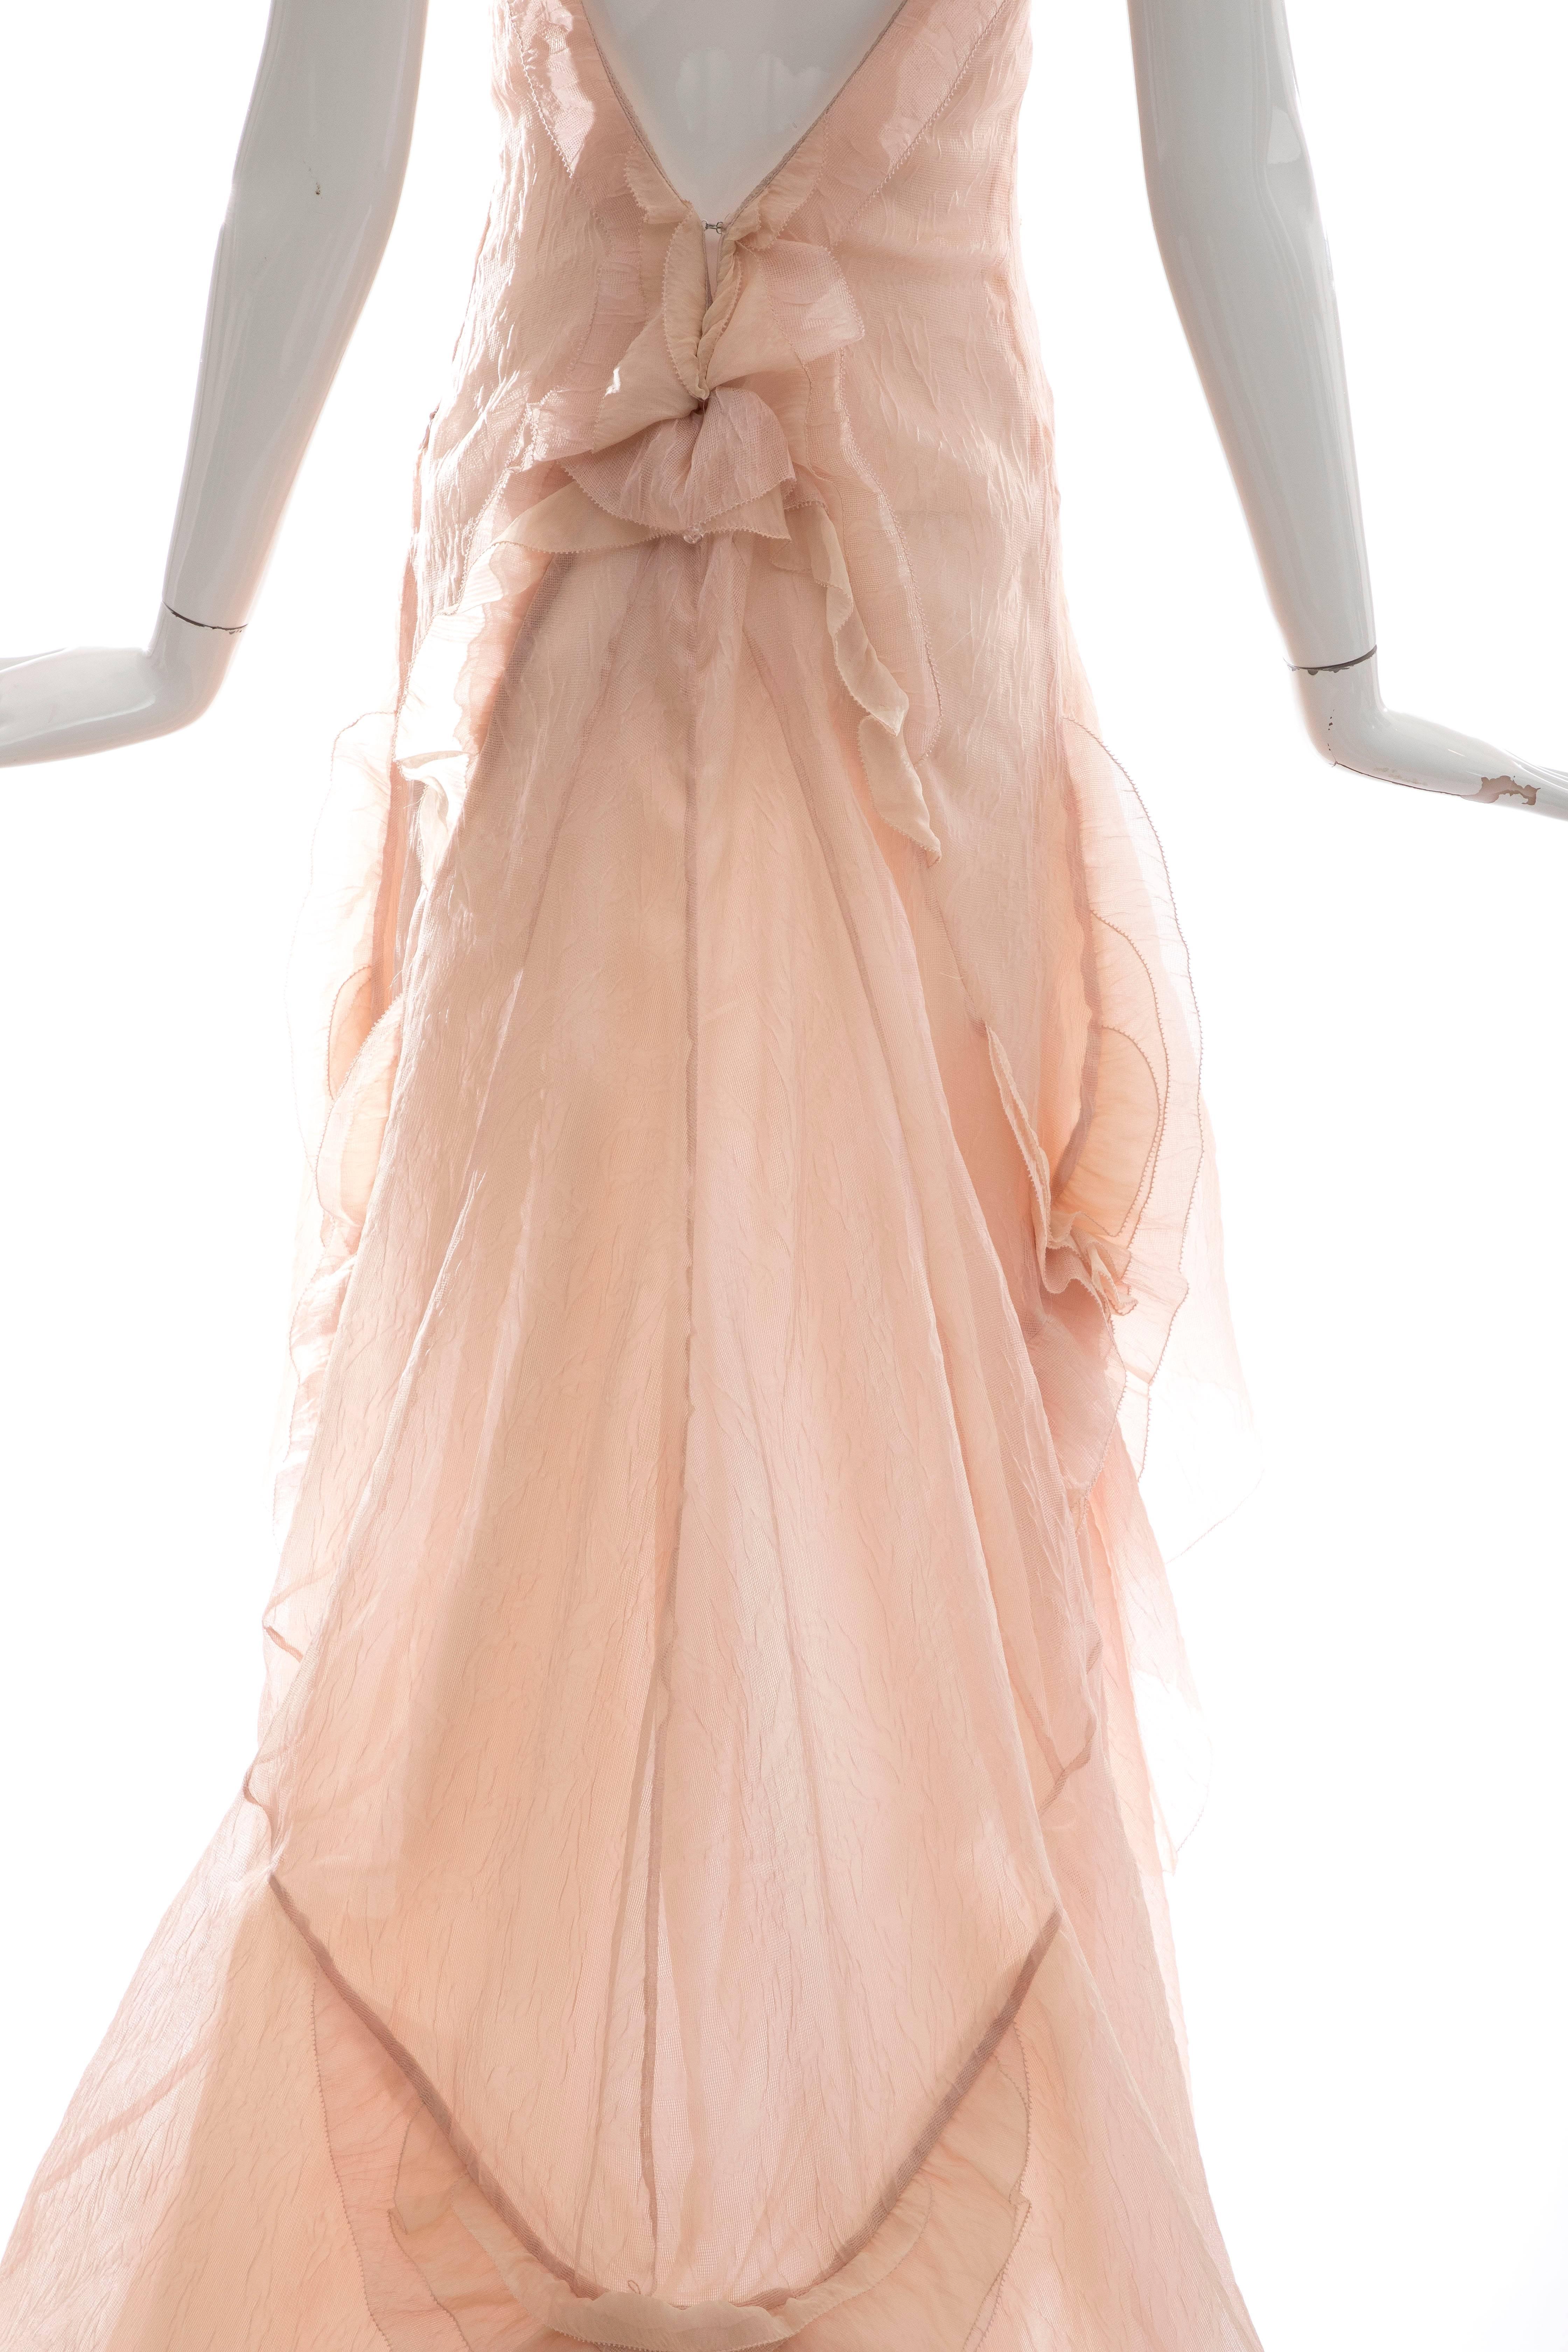 Women's Olivier Theyskens for Nina Ricci Blush Silk Nylon Evening Dress, Spring 2009